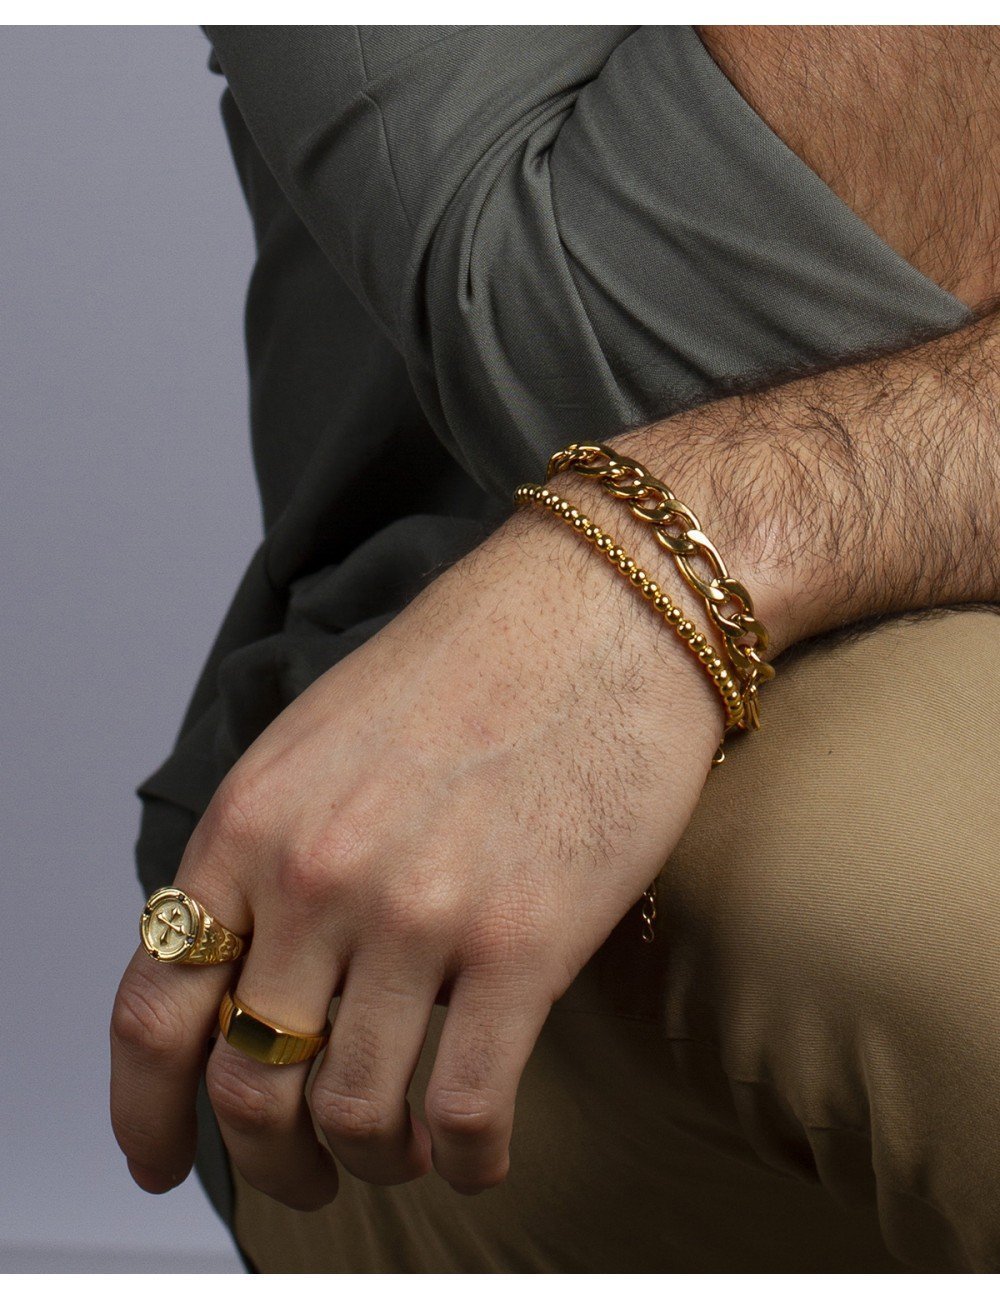 GOLD PLATED PREMIUM QUALITY BRACELET FOR MEN🖤 | Mens bracelet gold  jewelry, Mens gold bracelets, Jewelry bracelets gold